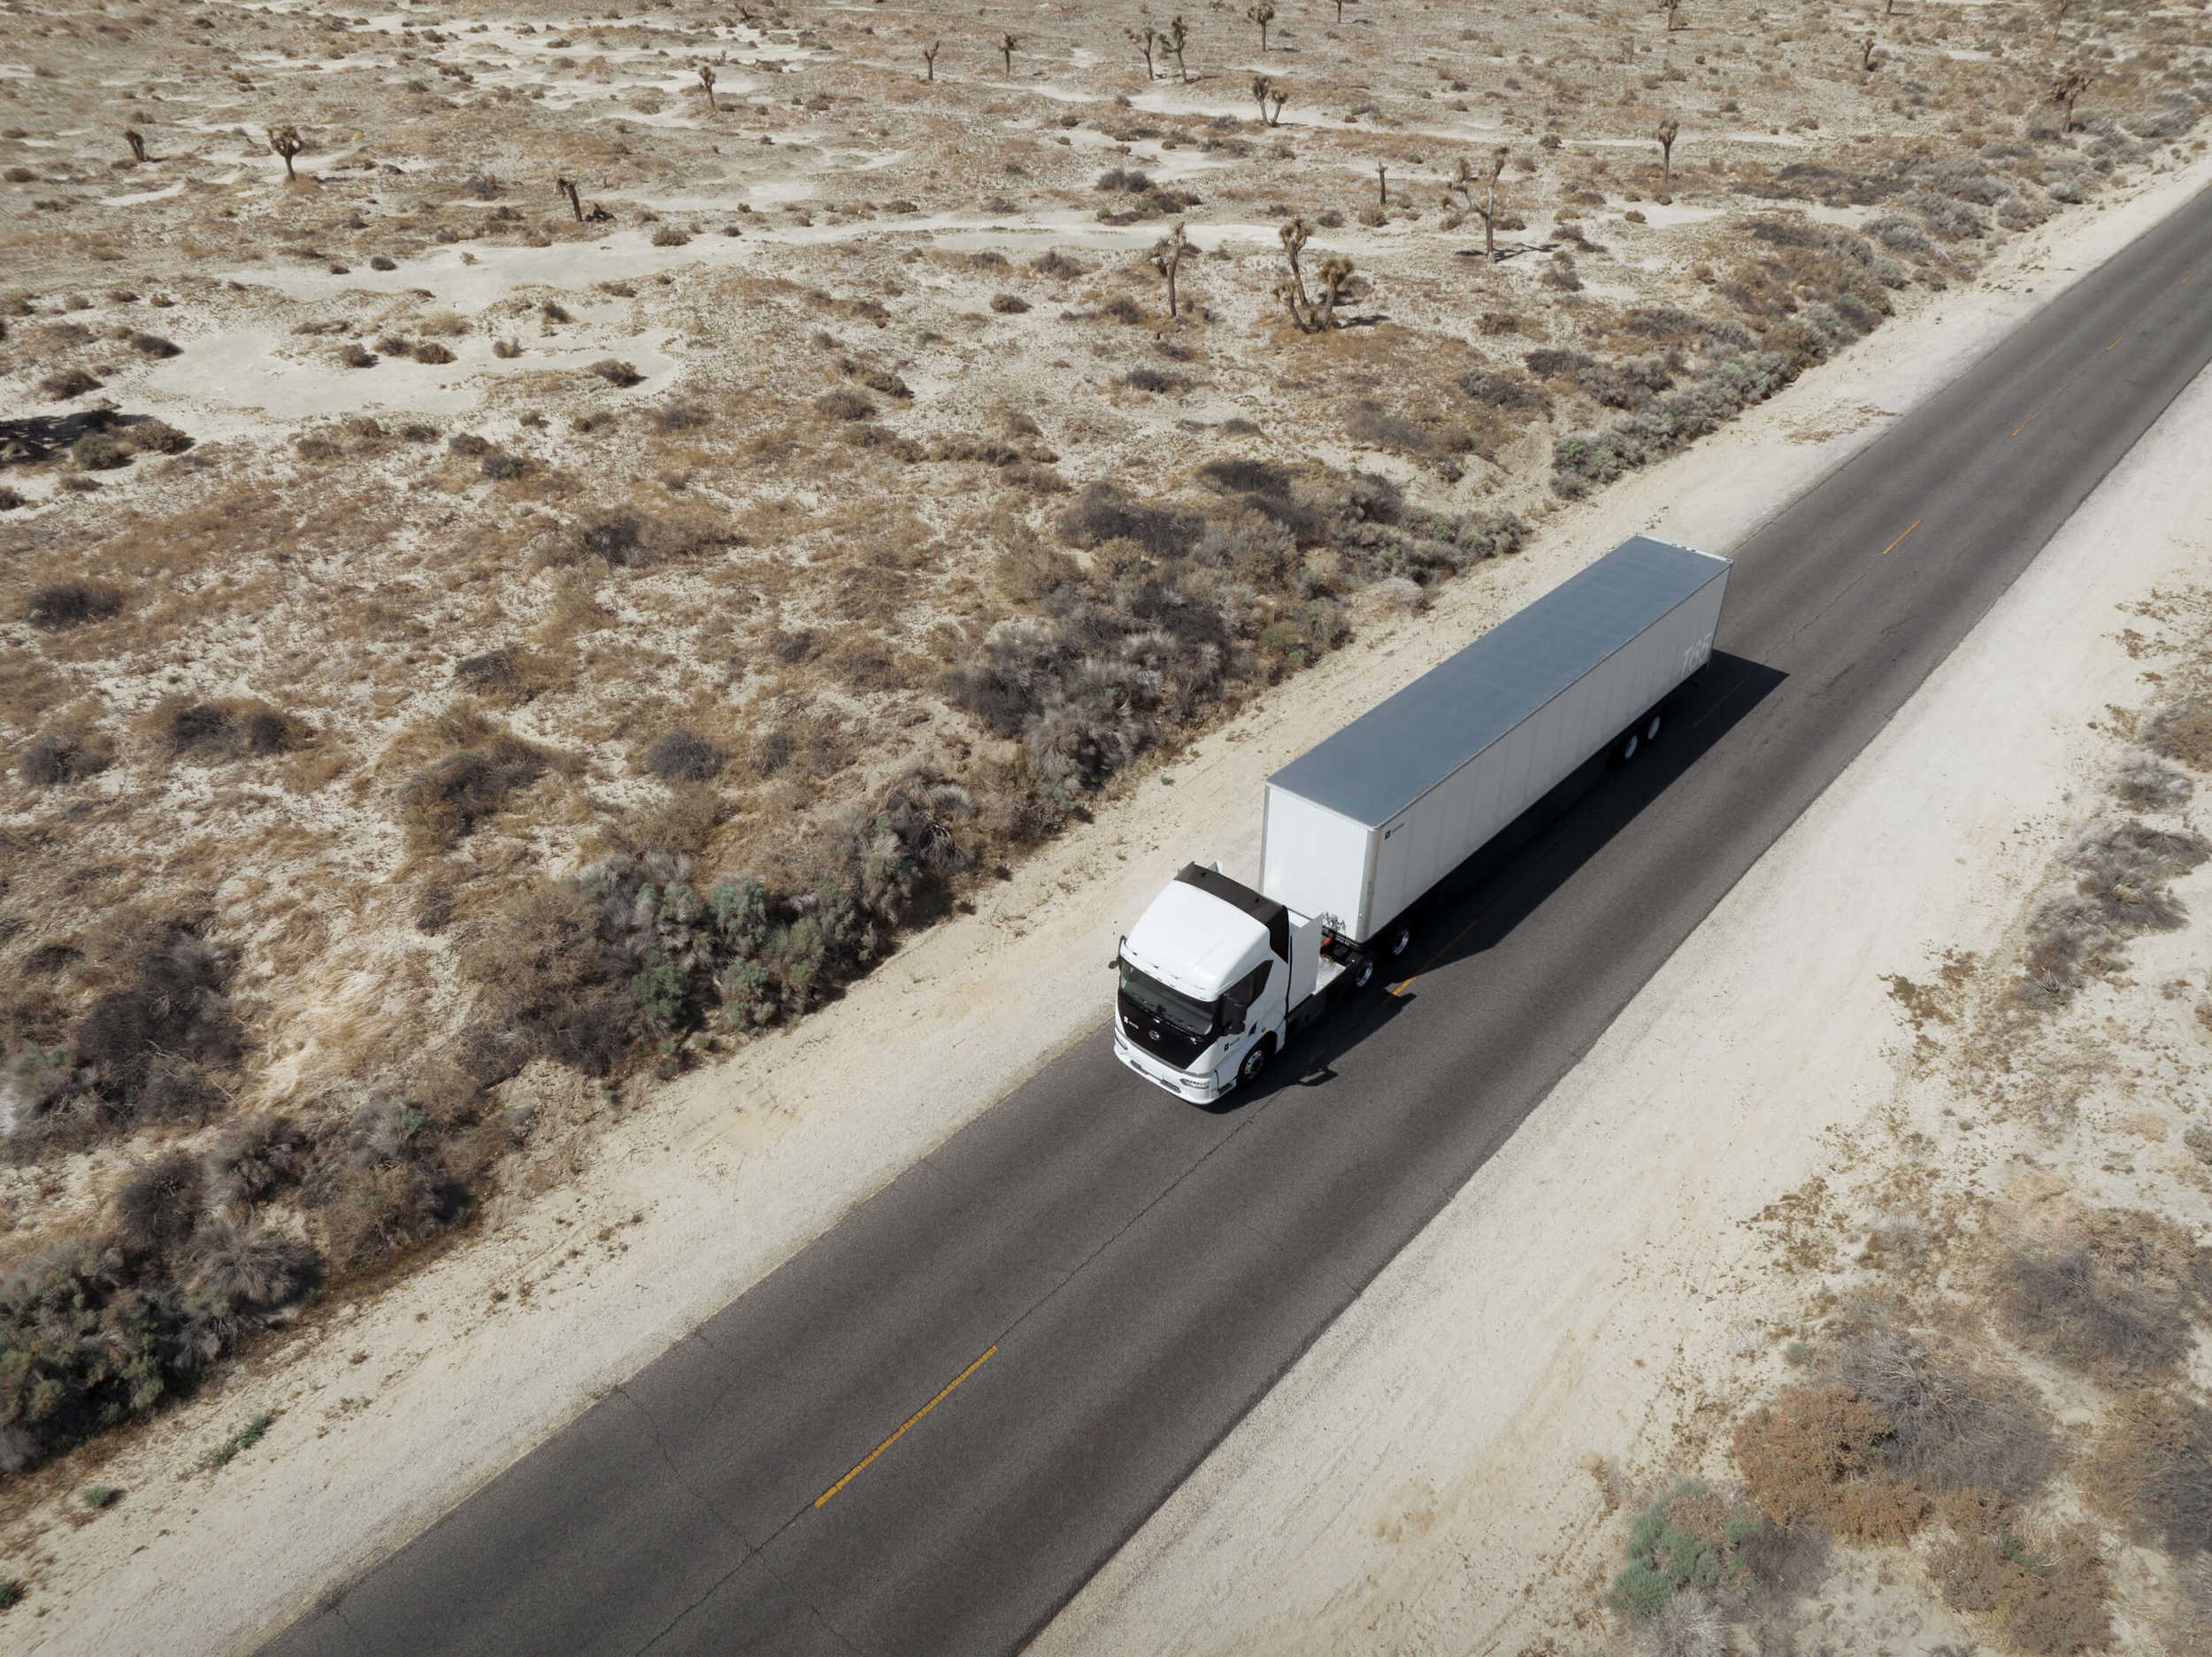 Einride Trailer on a desert road in the US